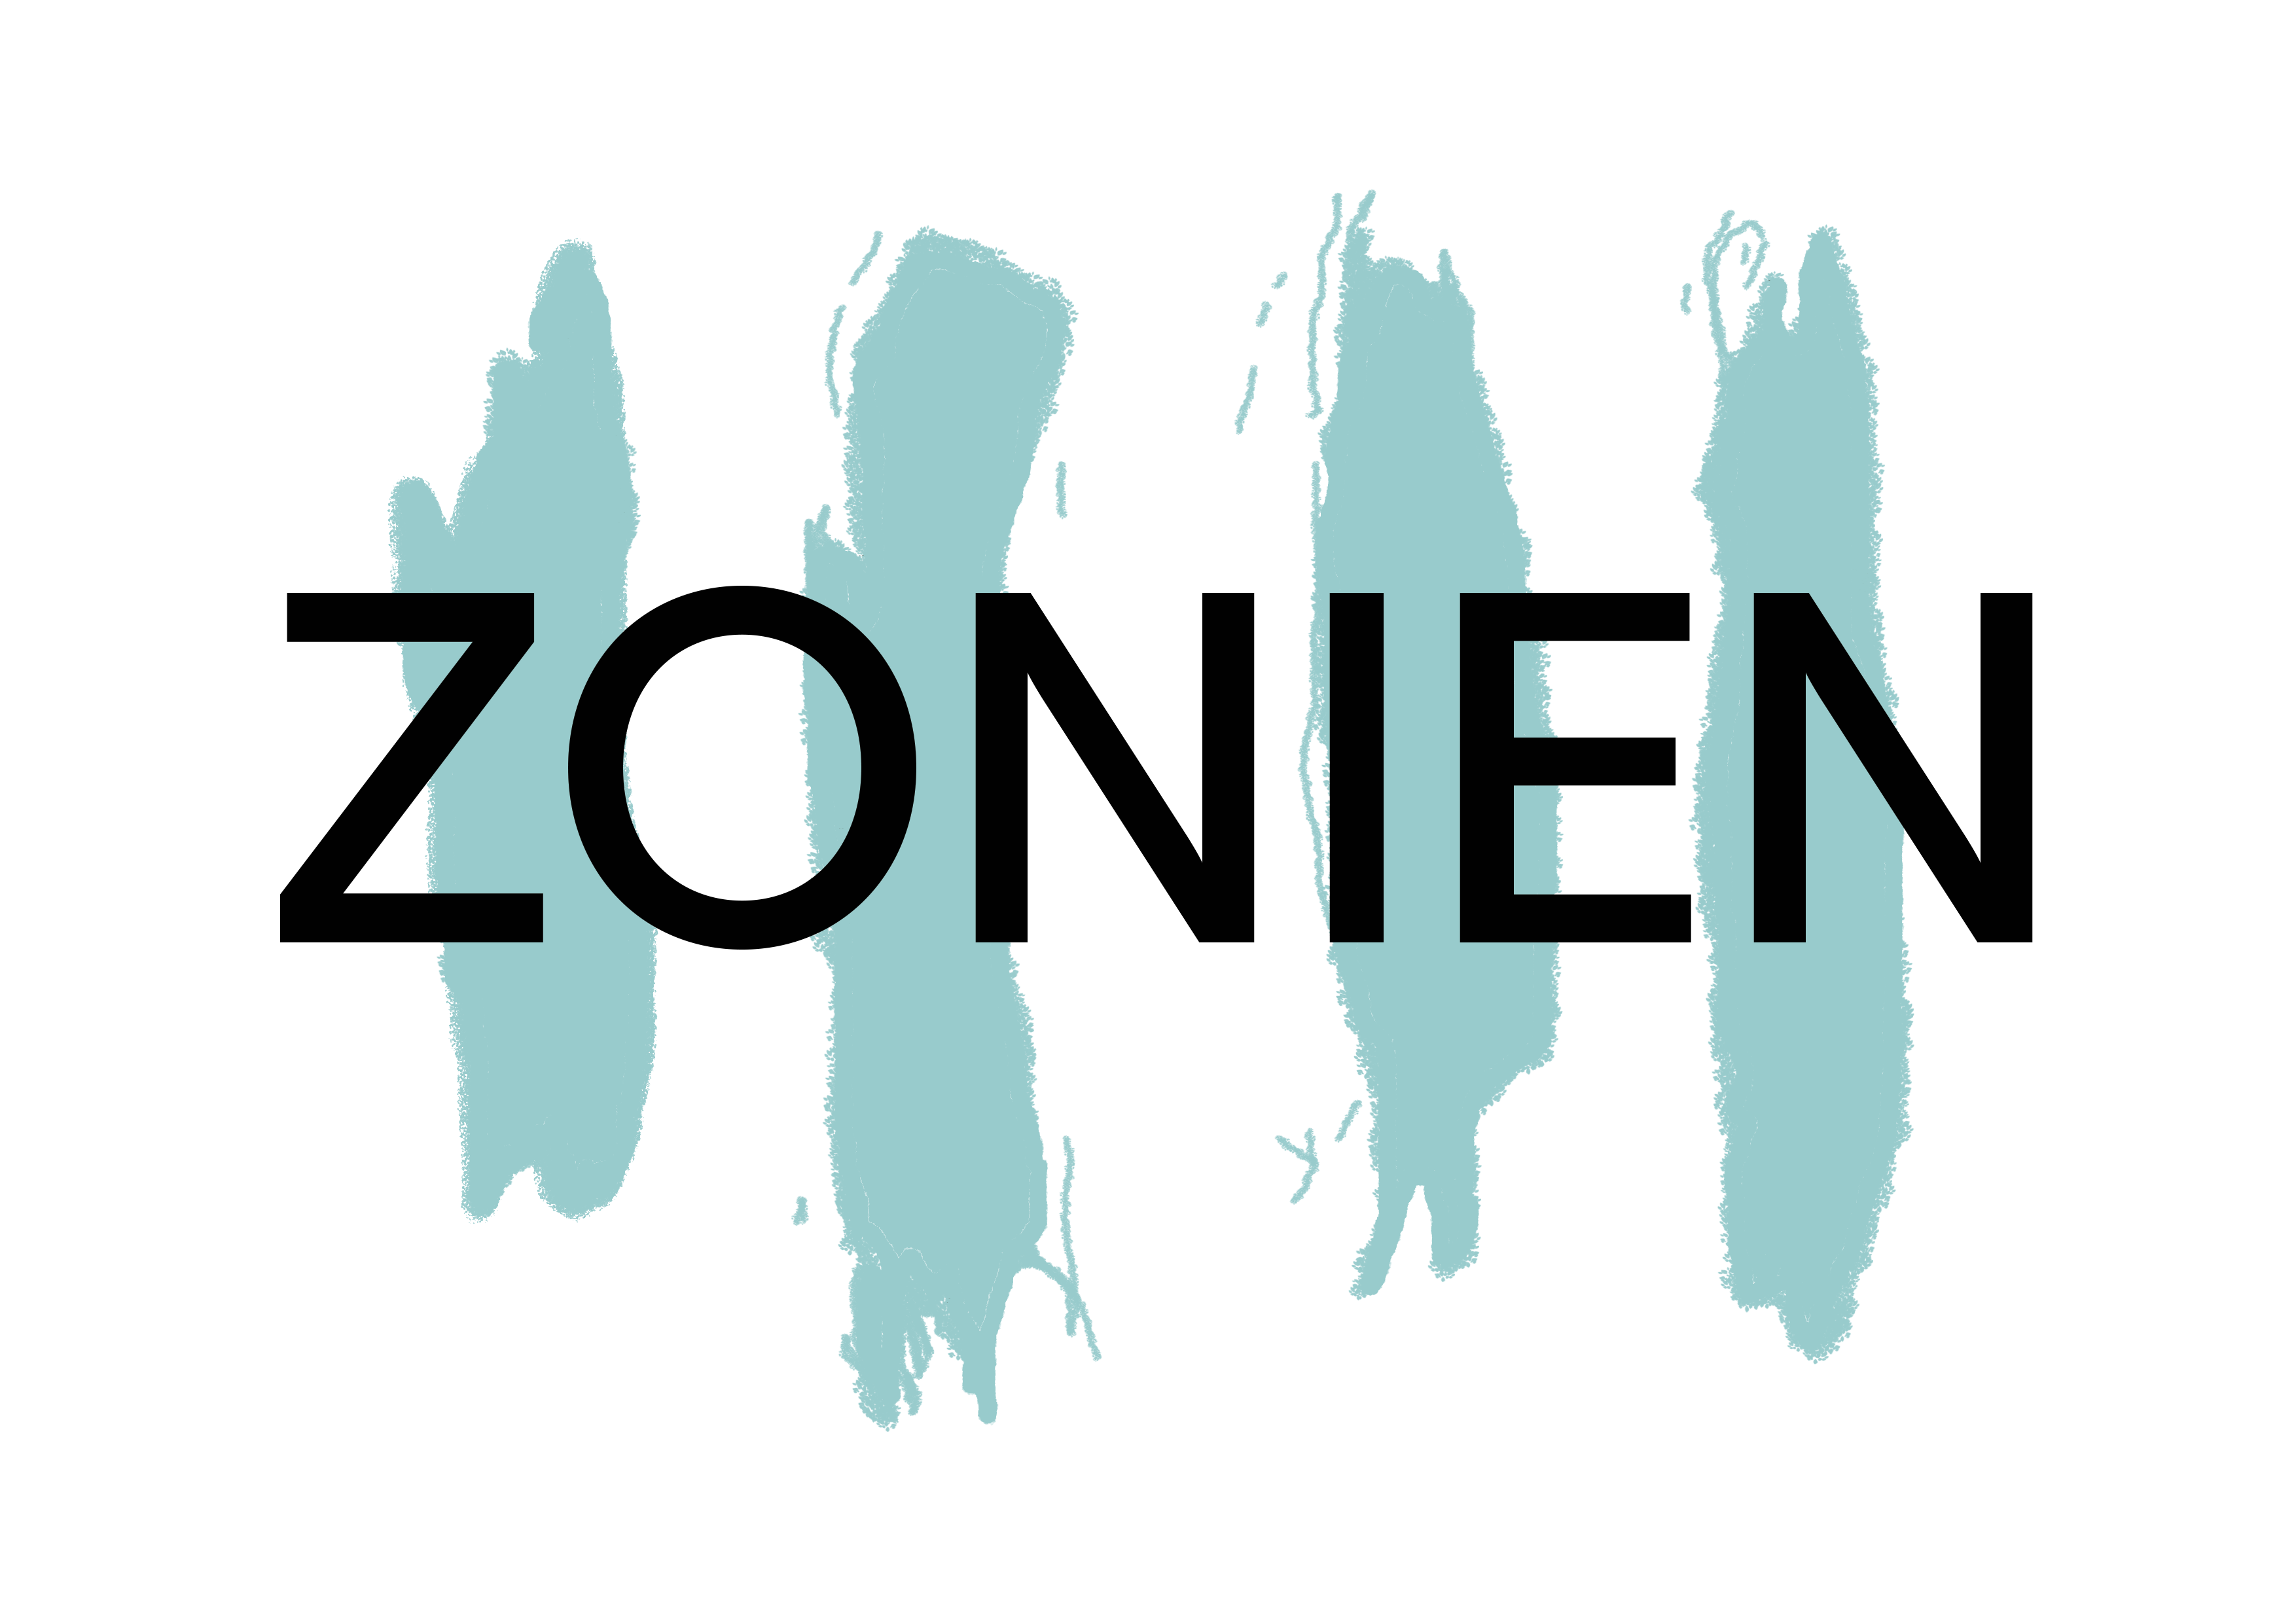 Logo Woonzorgcentrum Zoniën